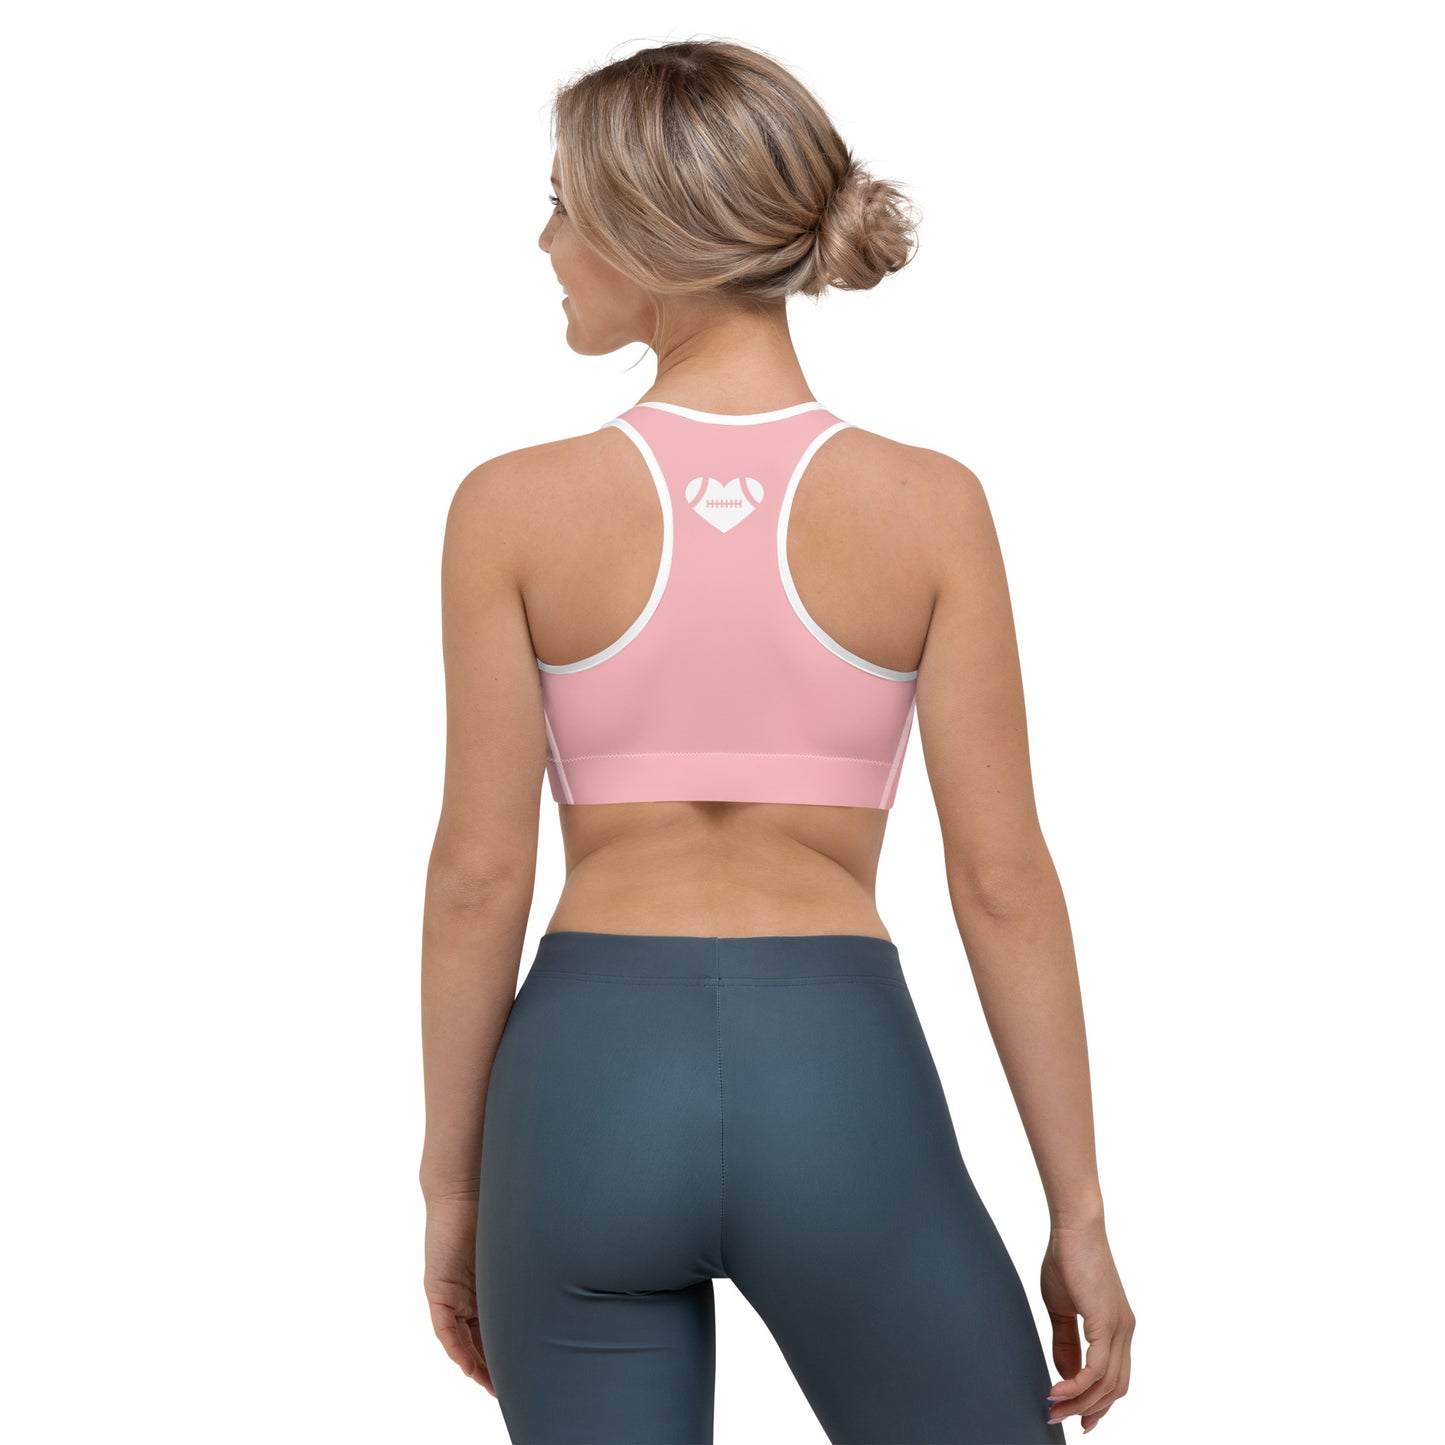 AFA Basics Light Pink Sports bra